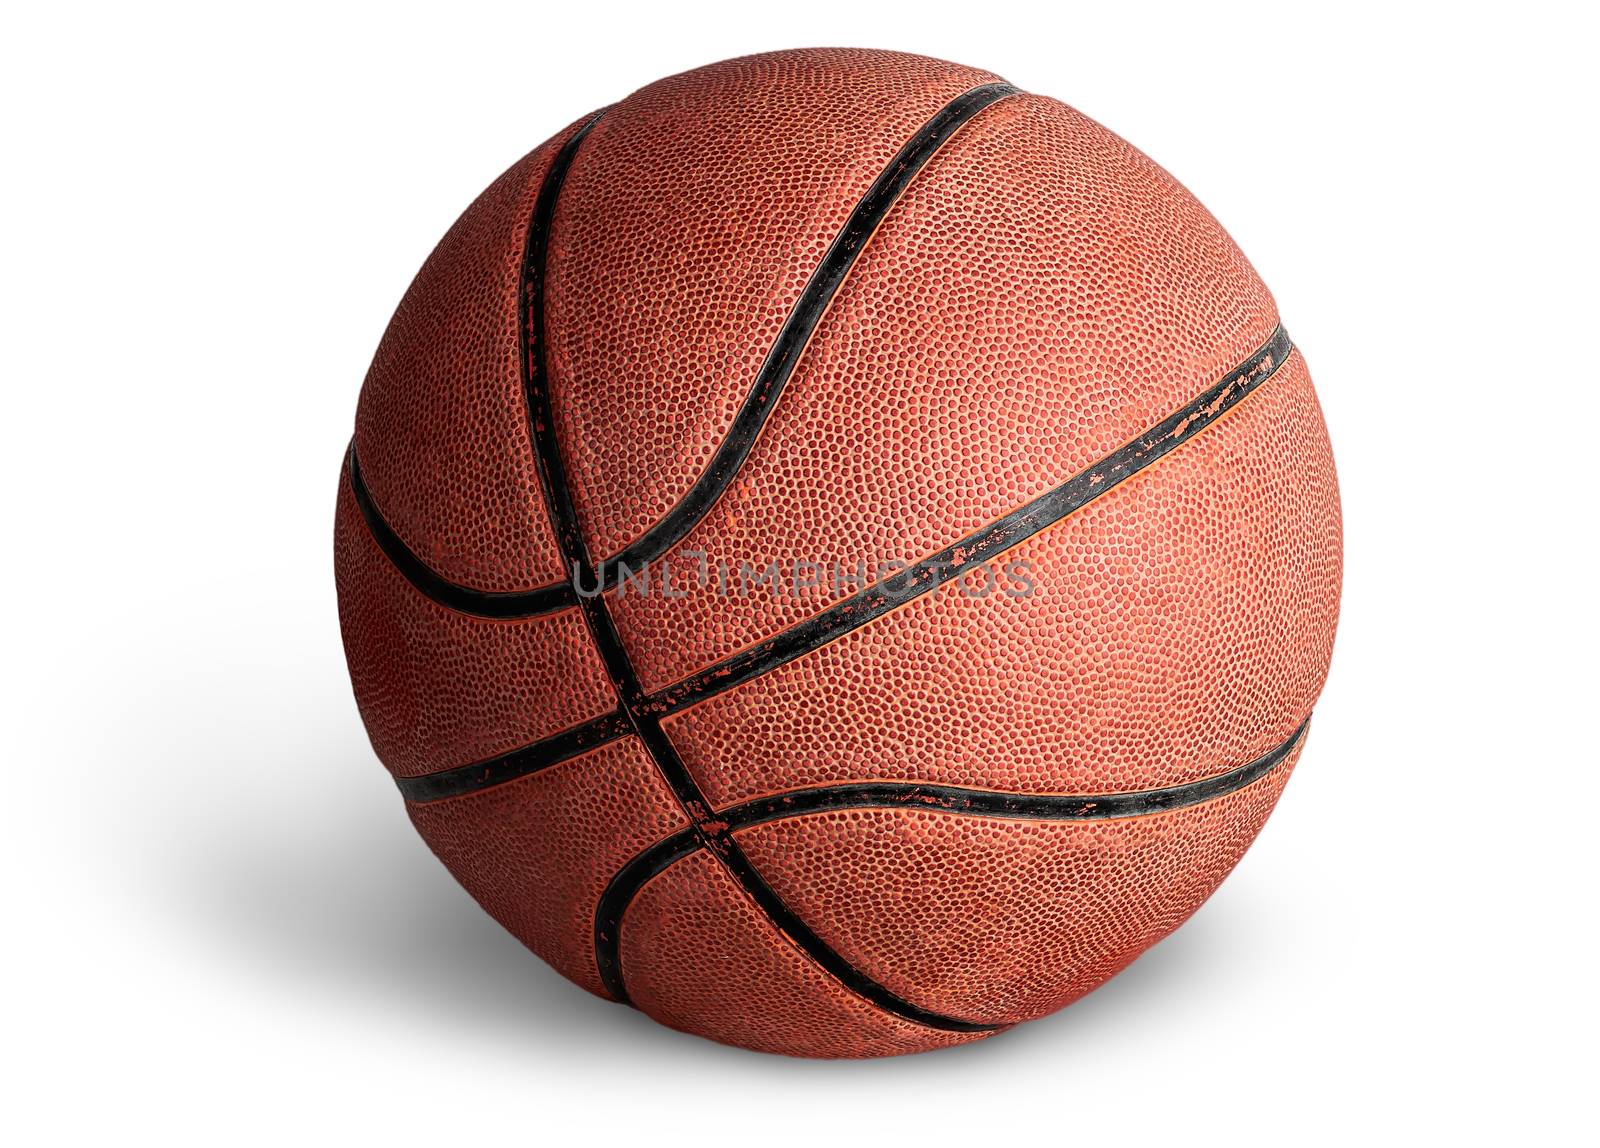 Old basketball ball by Cipariss